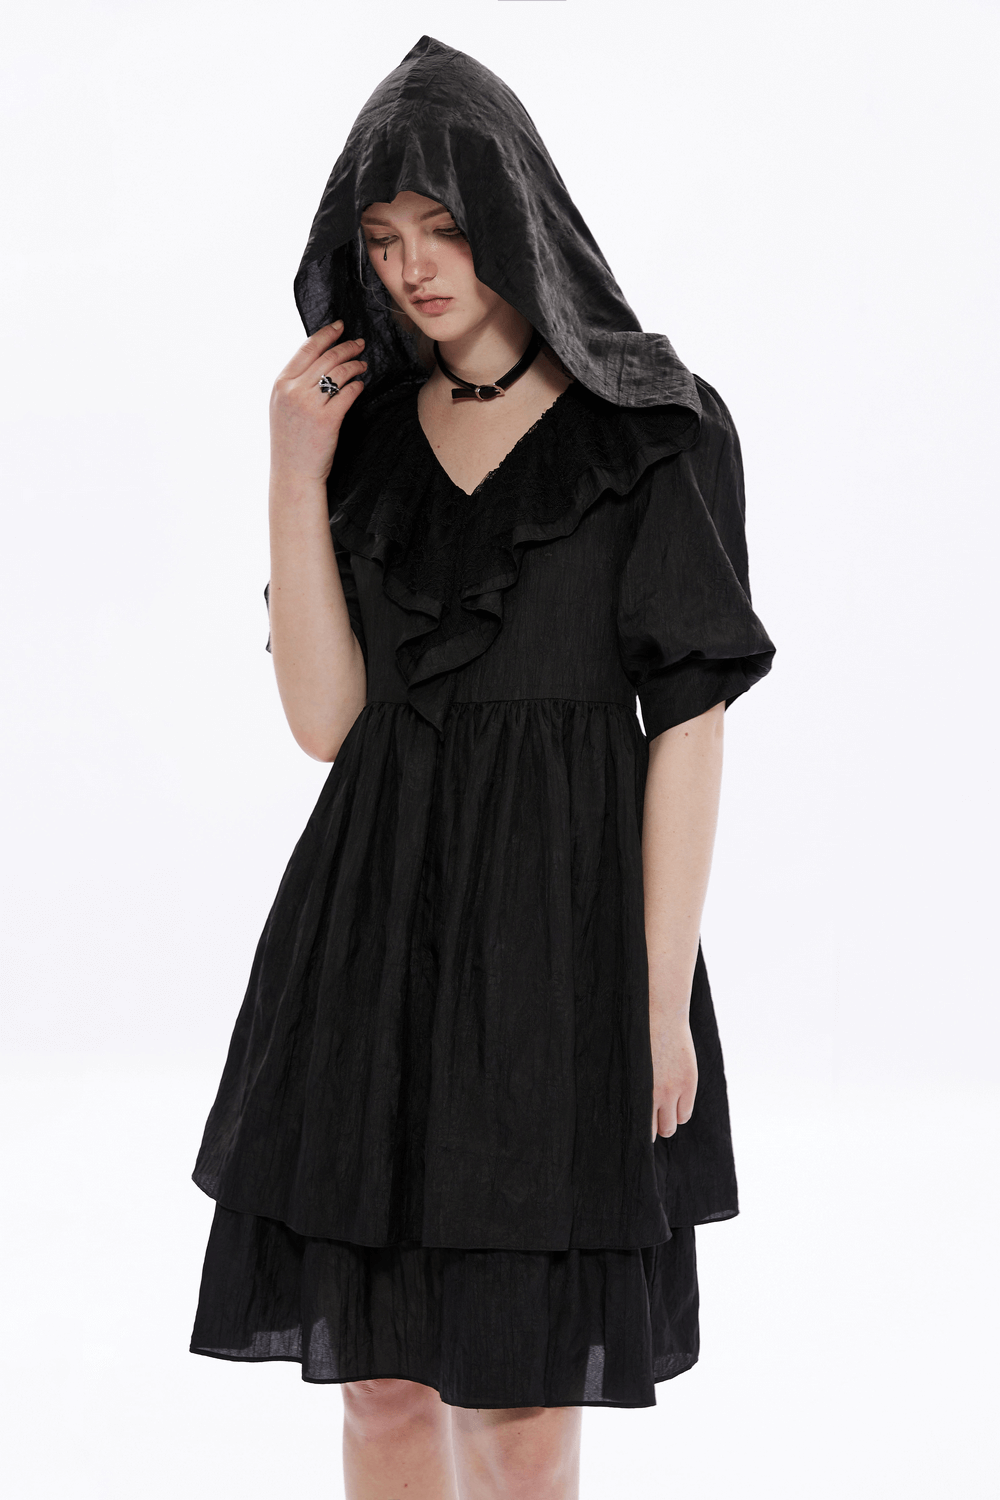 Vintage-Inspired Hooded Ruffle Gothic Midi Dress